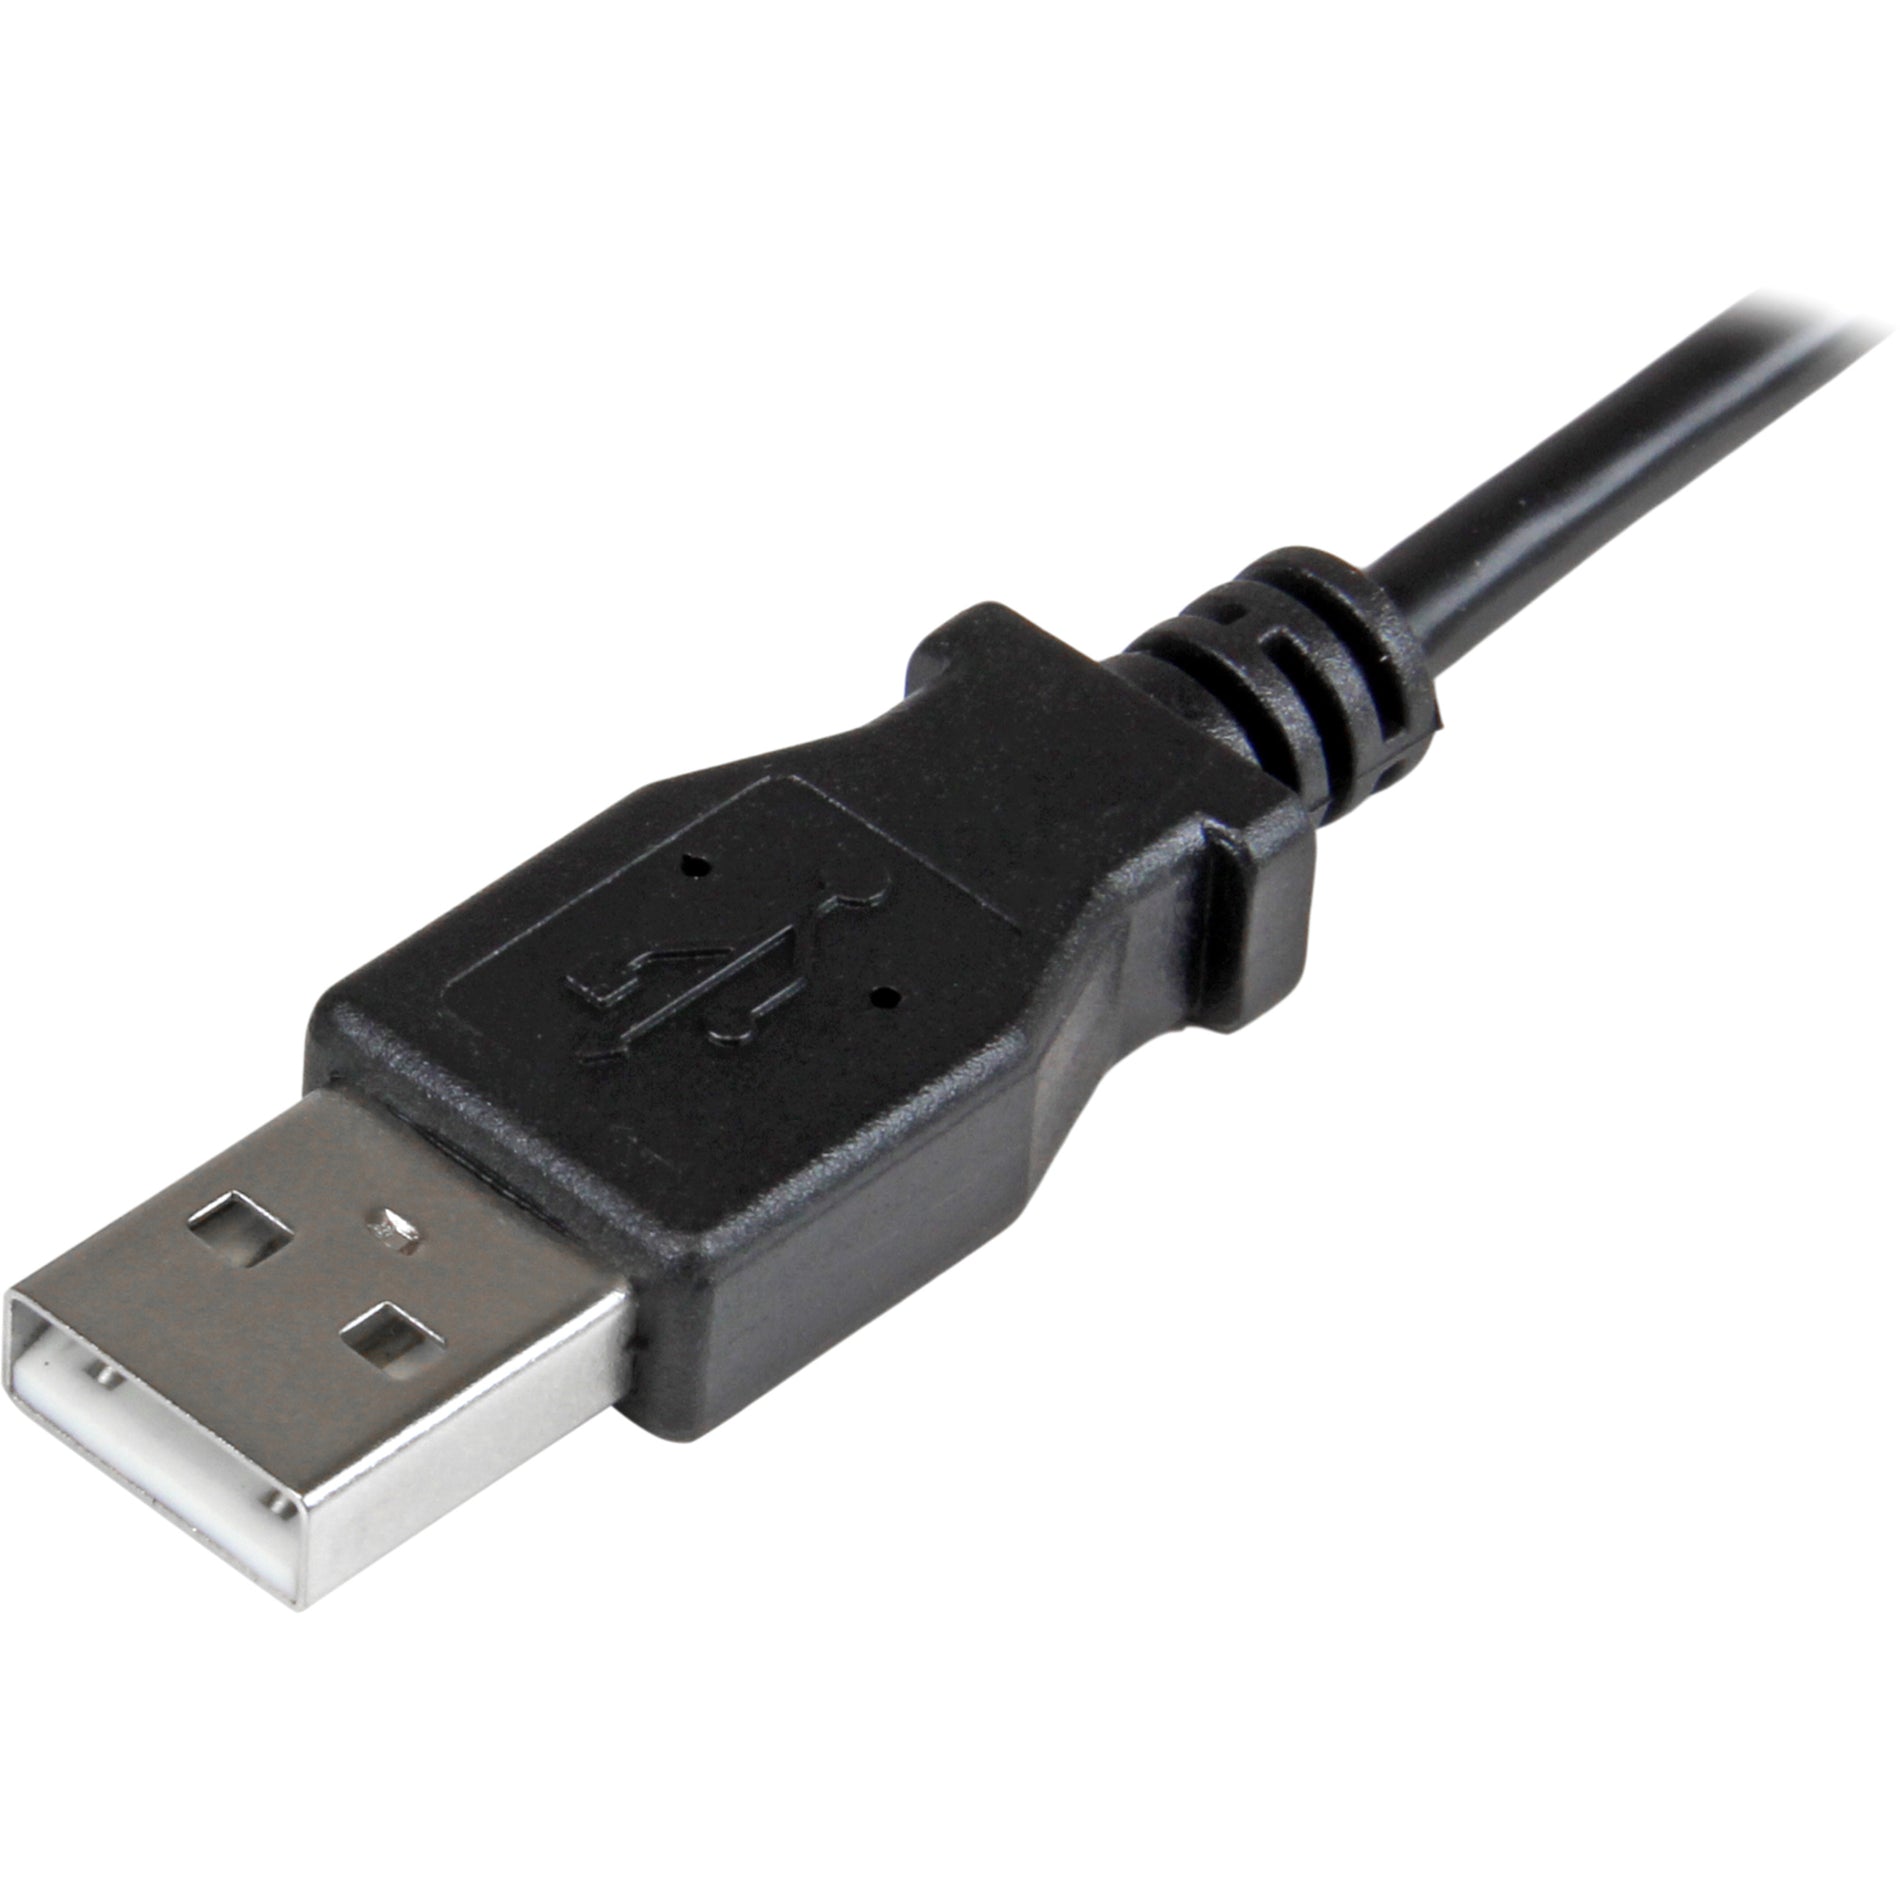 StarTech.com 美商启讯（StarTech.com） USBAUB2MRA 微型USB 充电和同步数据线 M/M - 直角微型USB - 2 米（6 英尺），USB 2.0 A to Micro USB